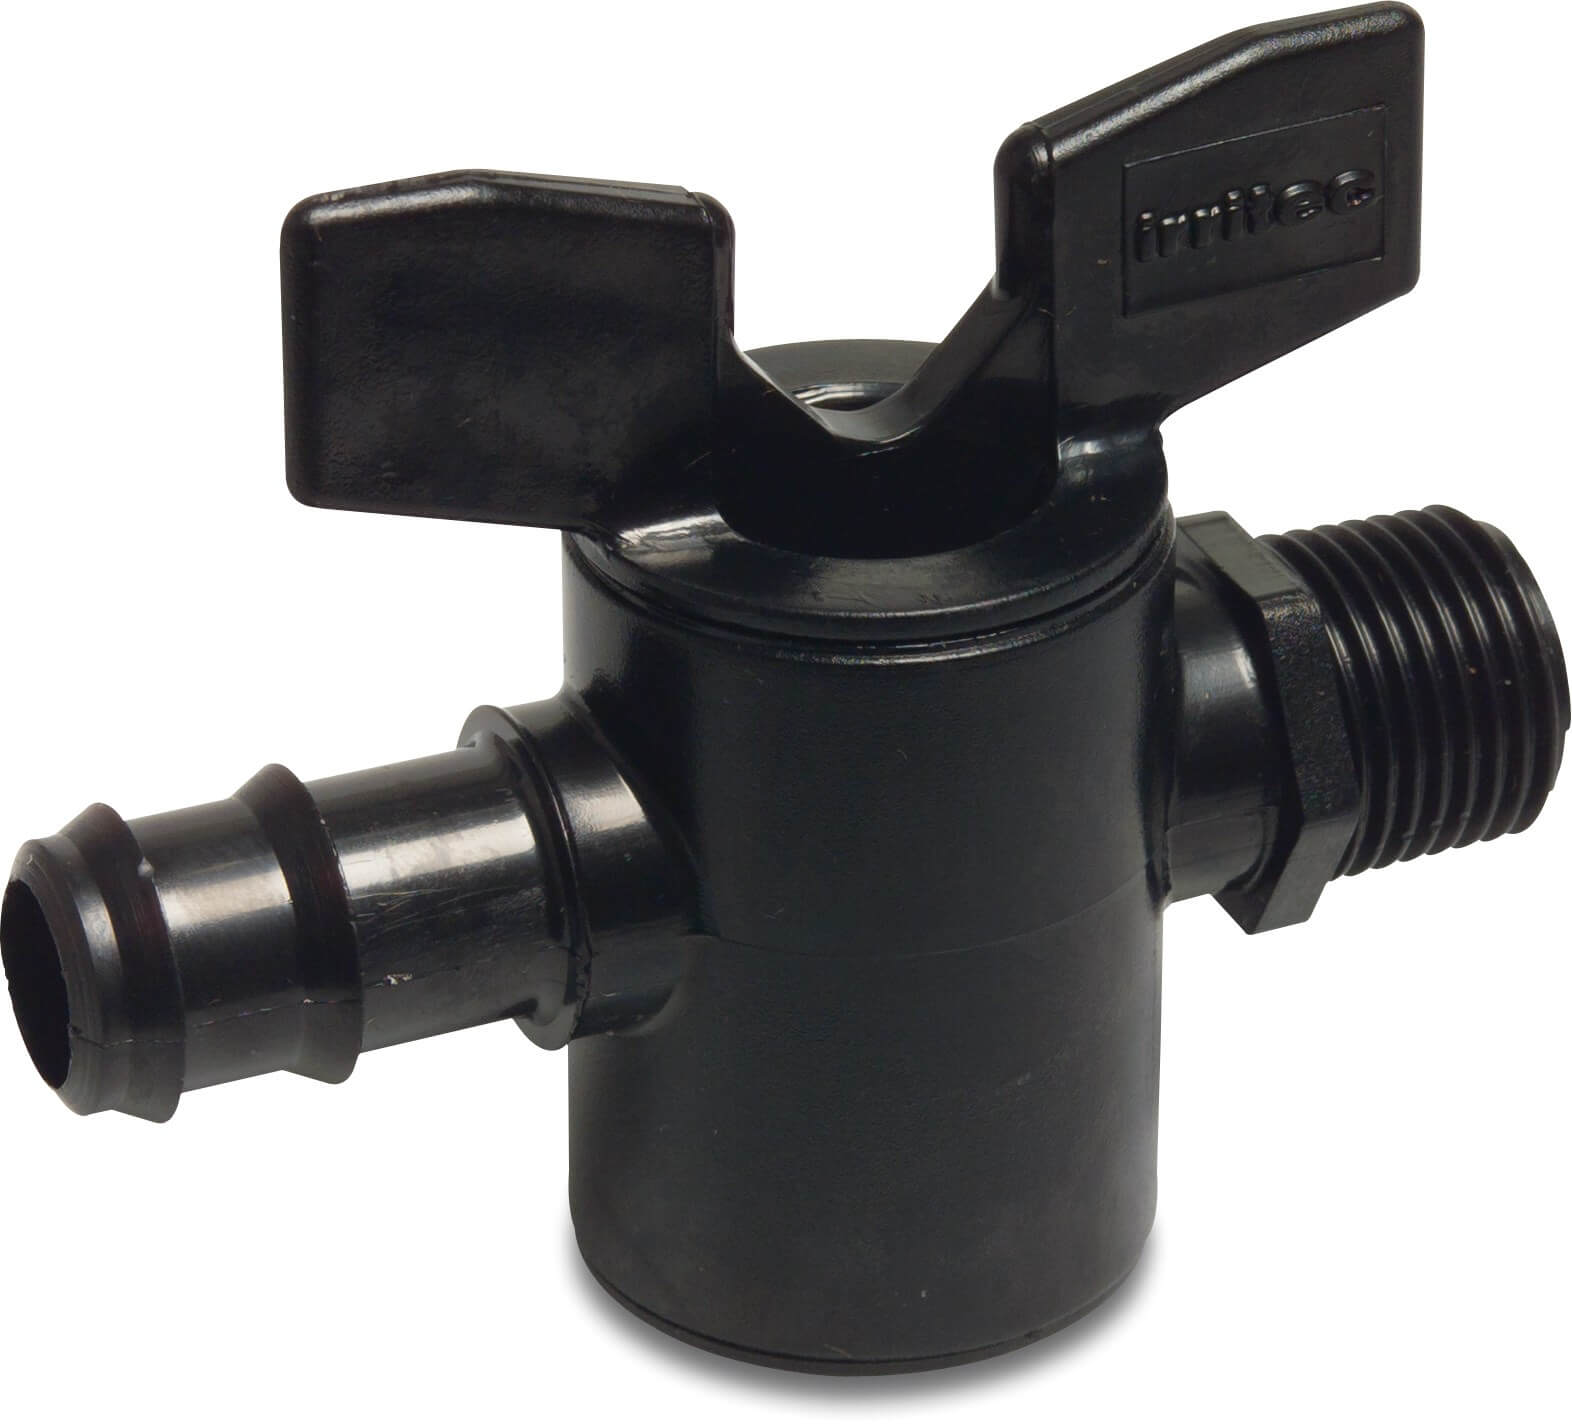 Plug valve PP 12 mm x 1/2" barbed x male thread 3bar black/red